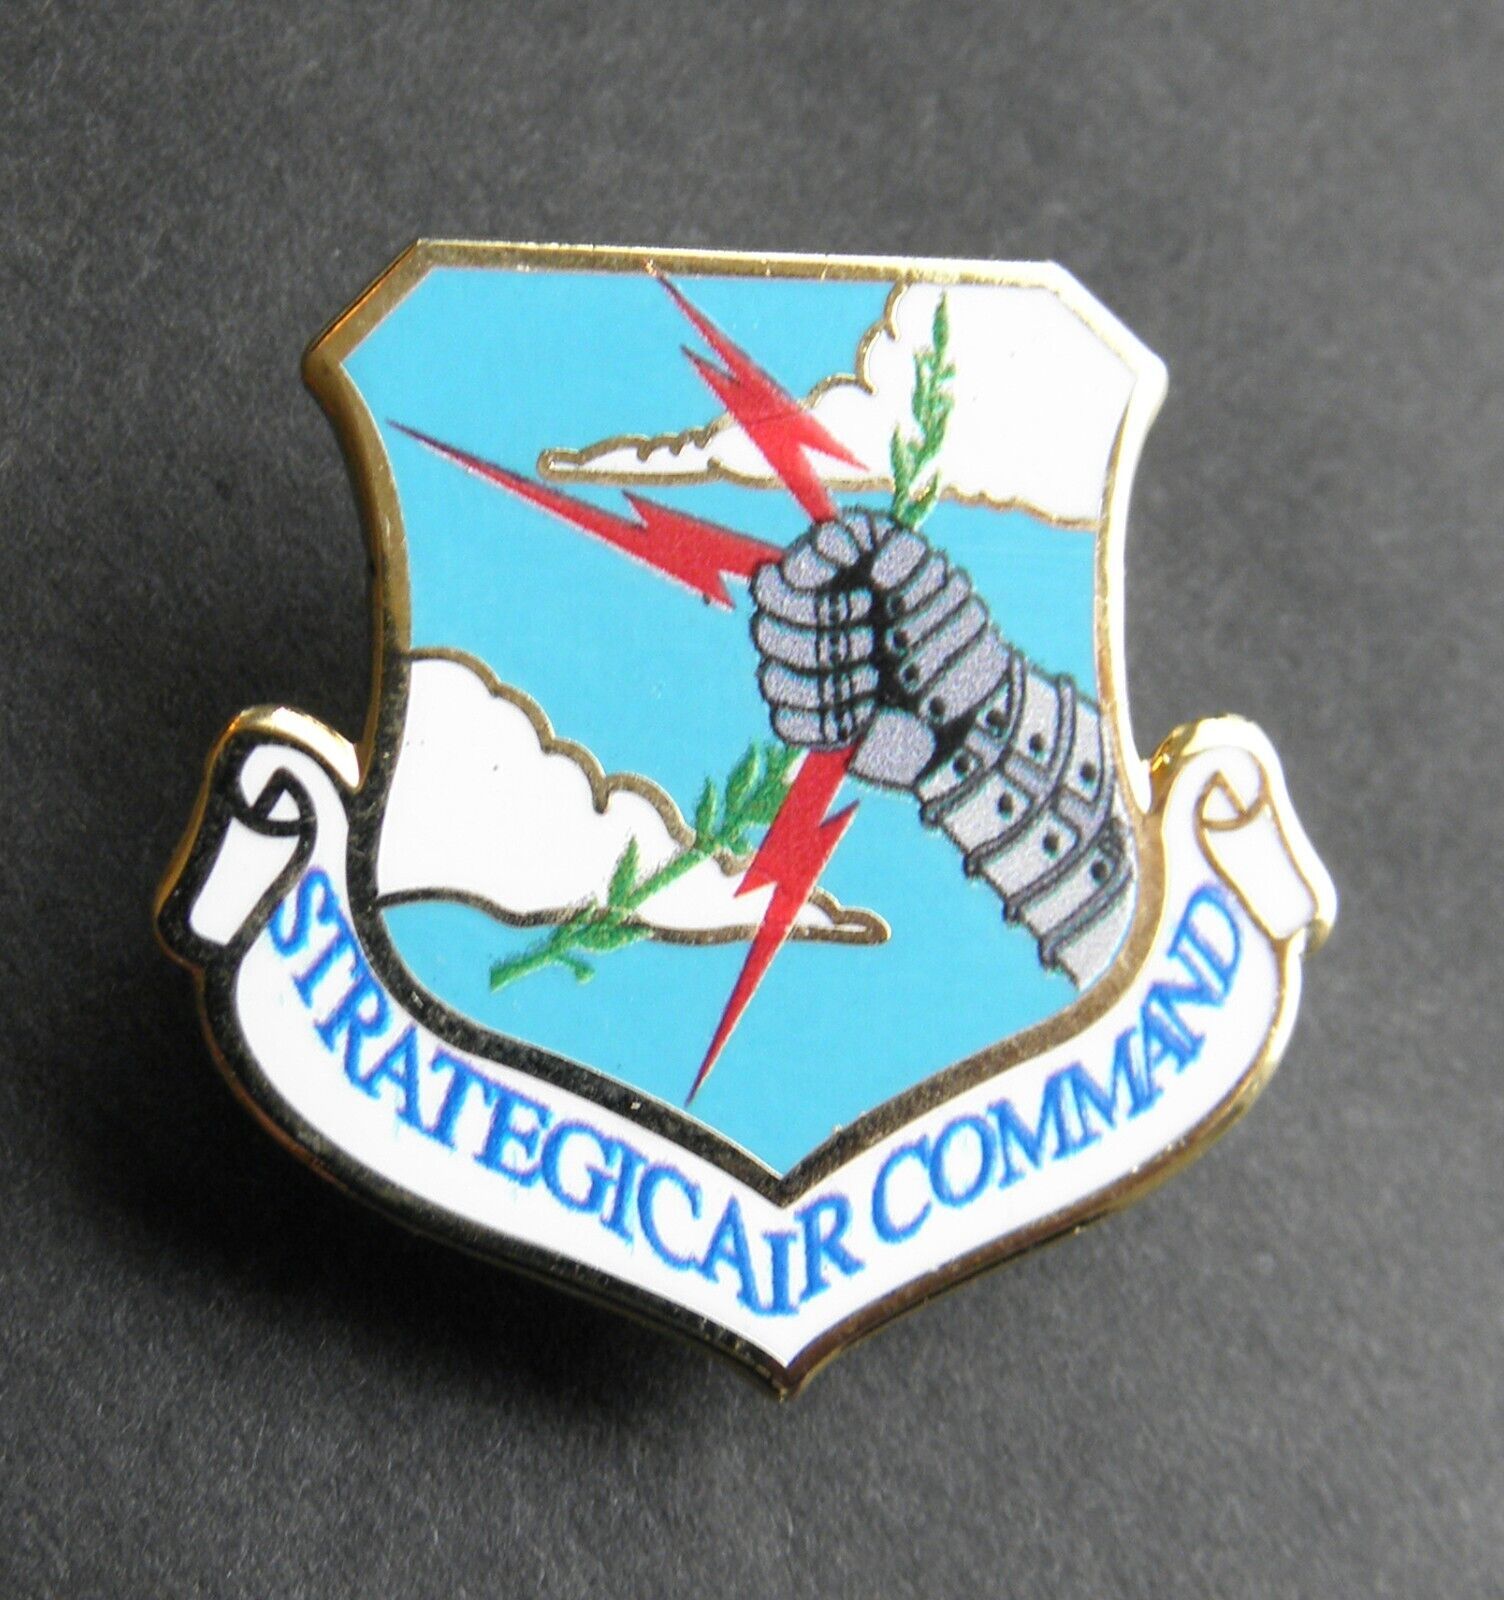 Strategic Air Command USAF Air Force Lapel Pin 1.2 inches - $5.74